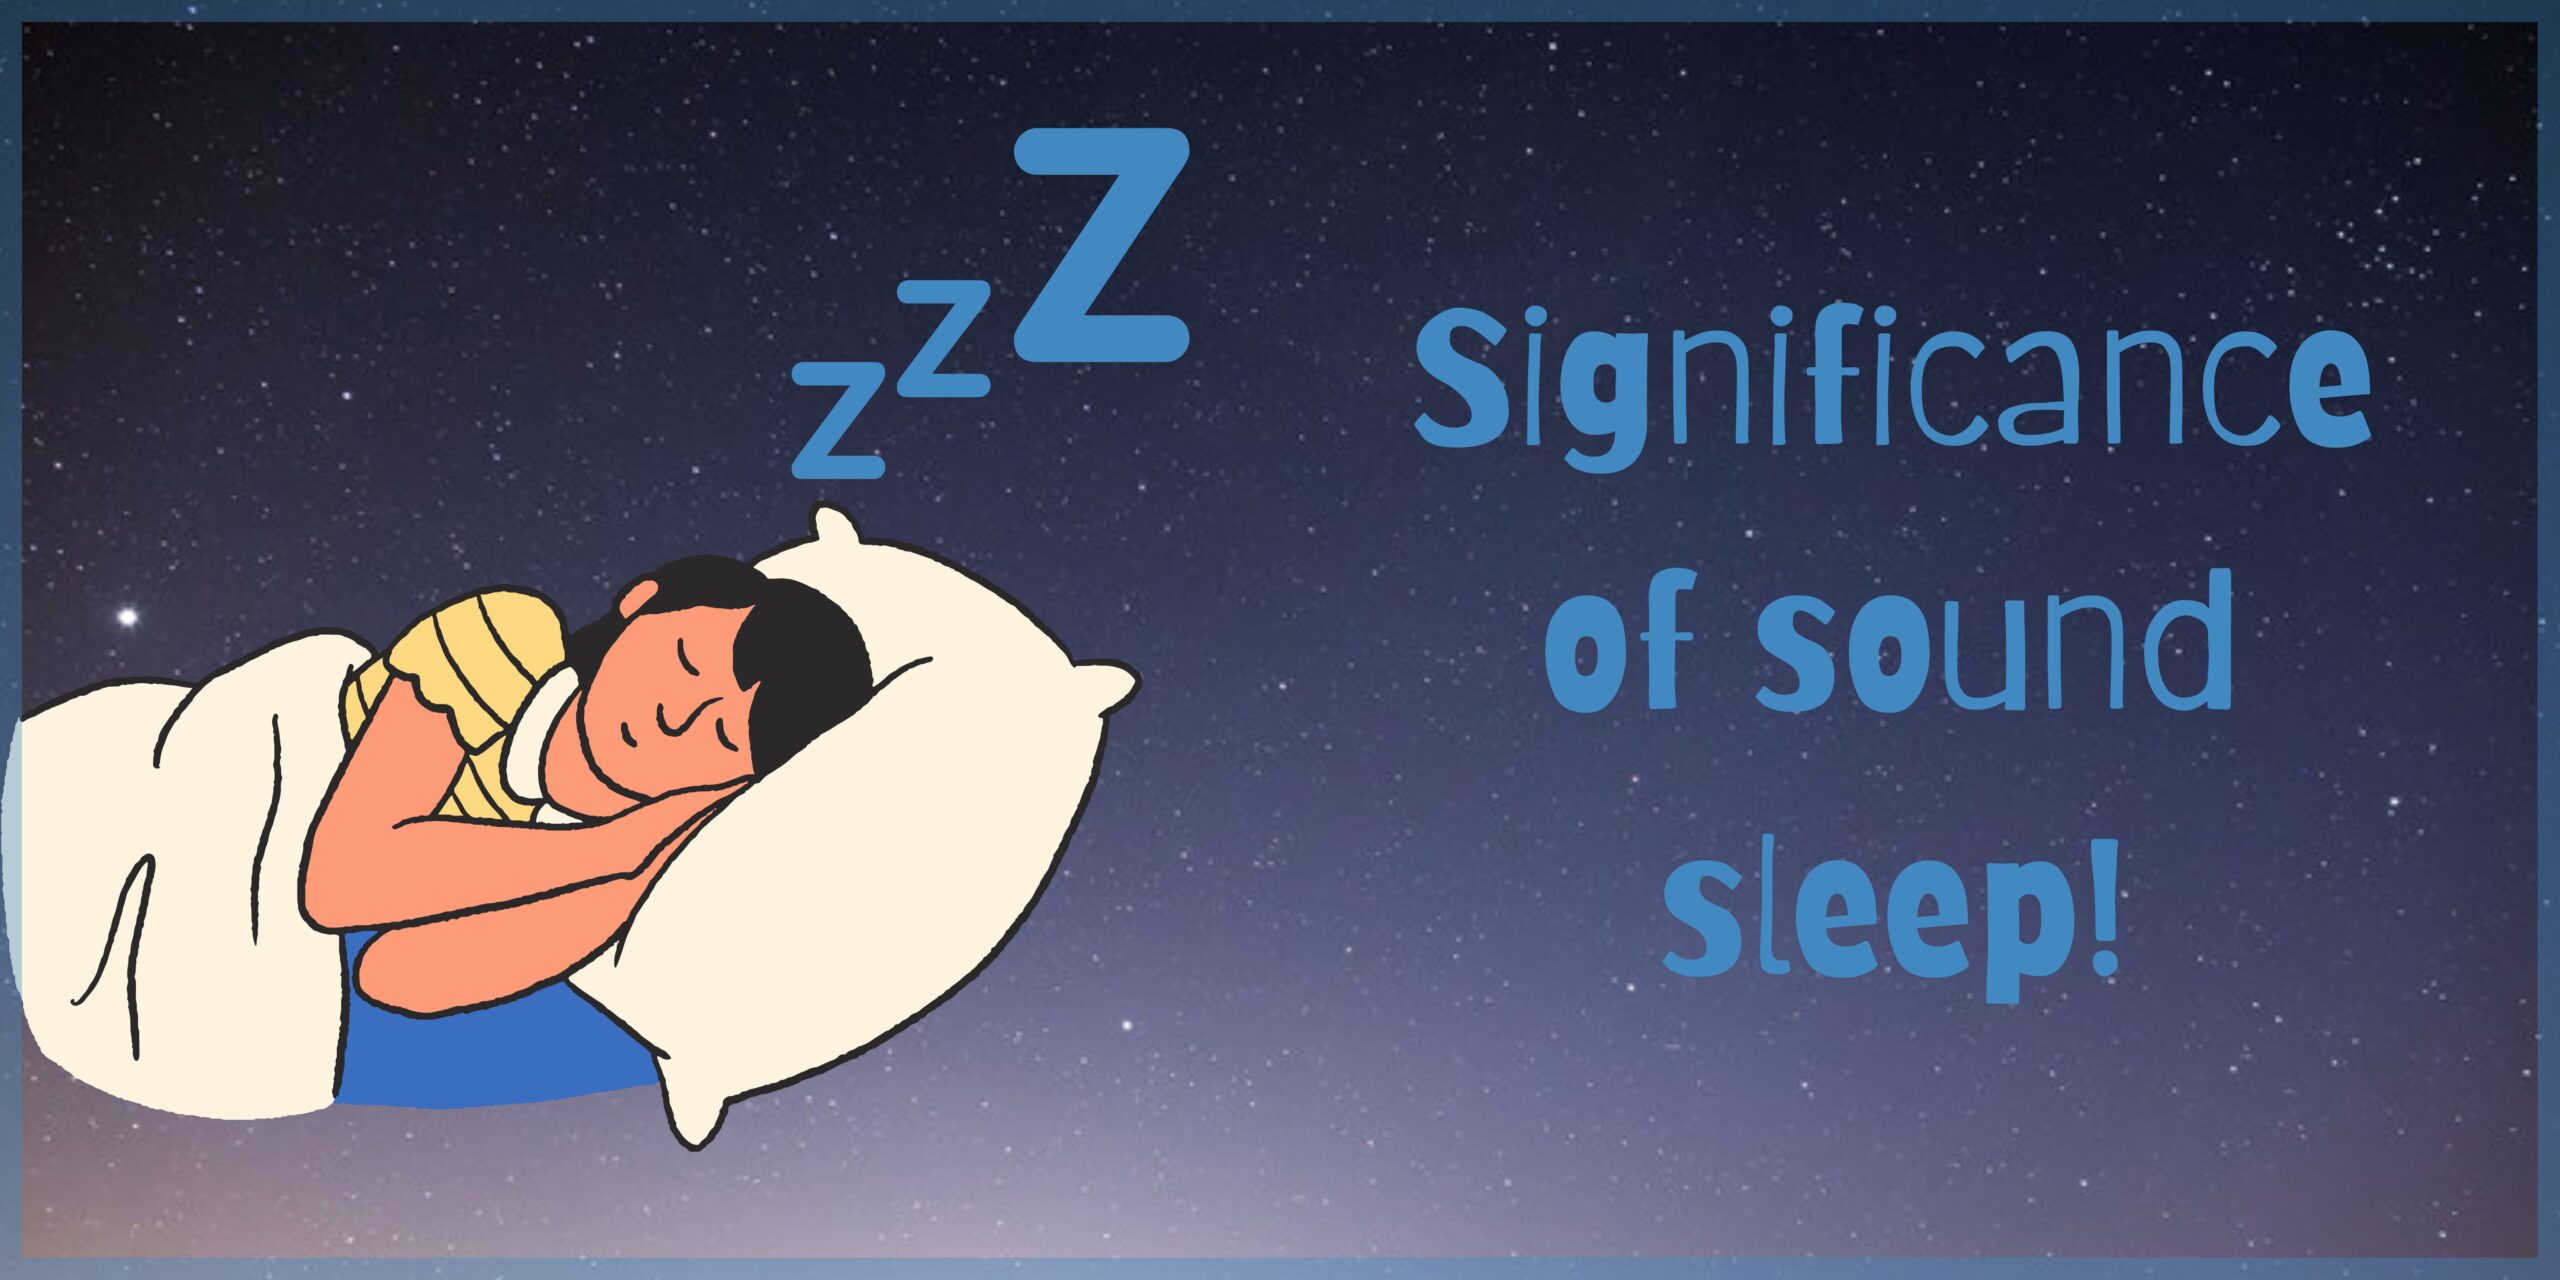 Significance of sound sleep!